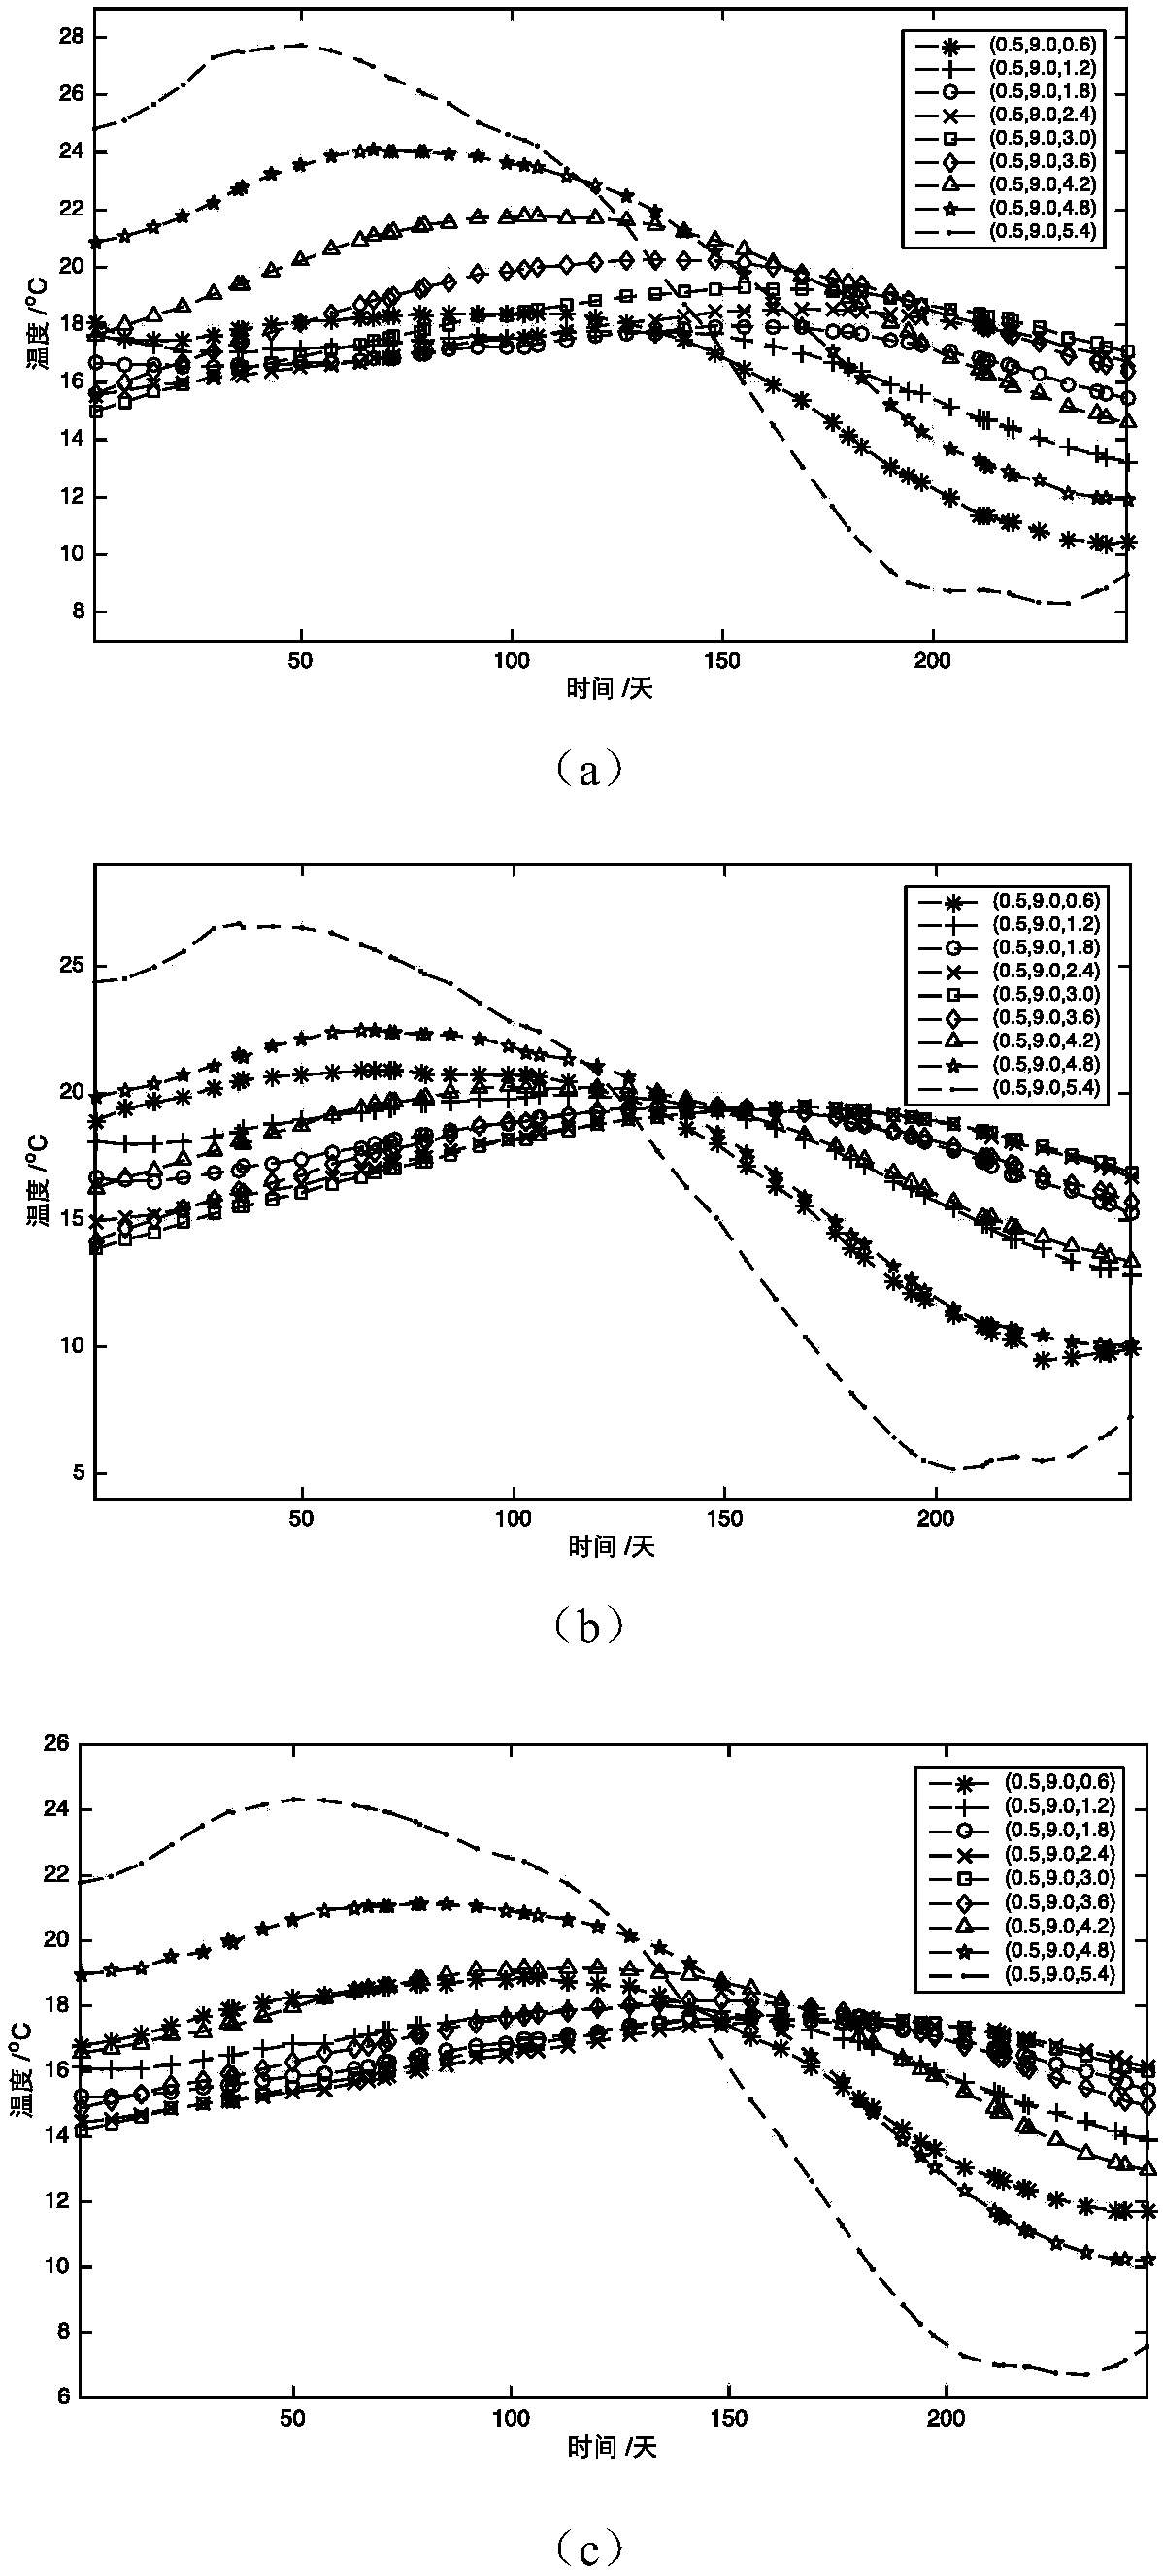 Estimation method for warehousing grain temperature field based on transfer learning